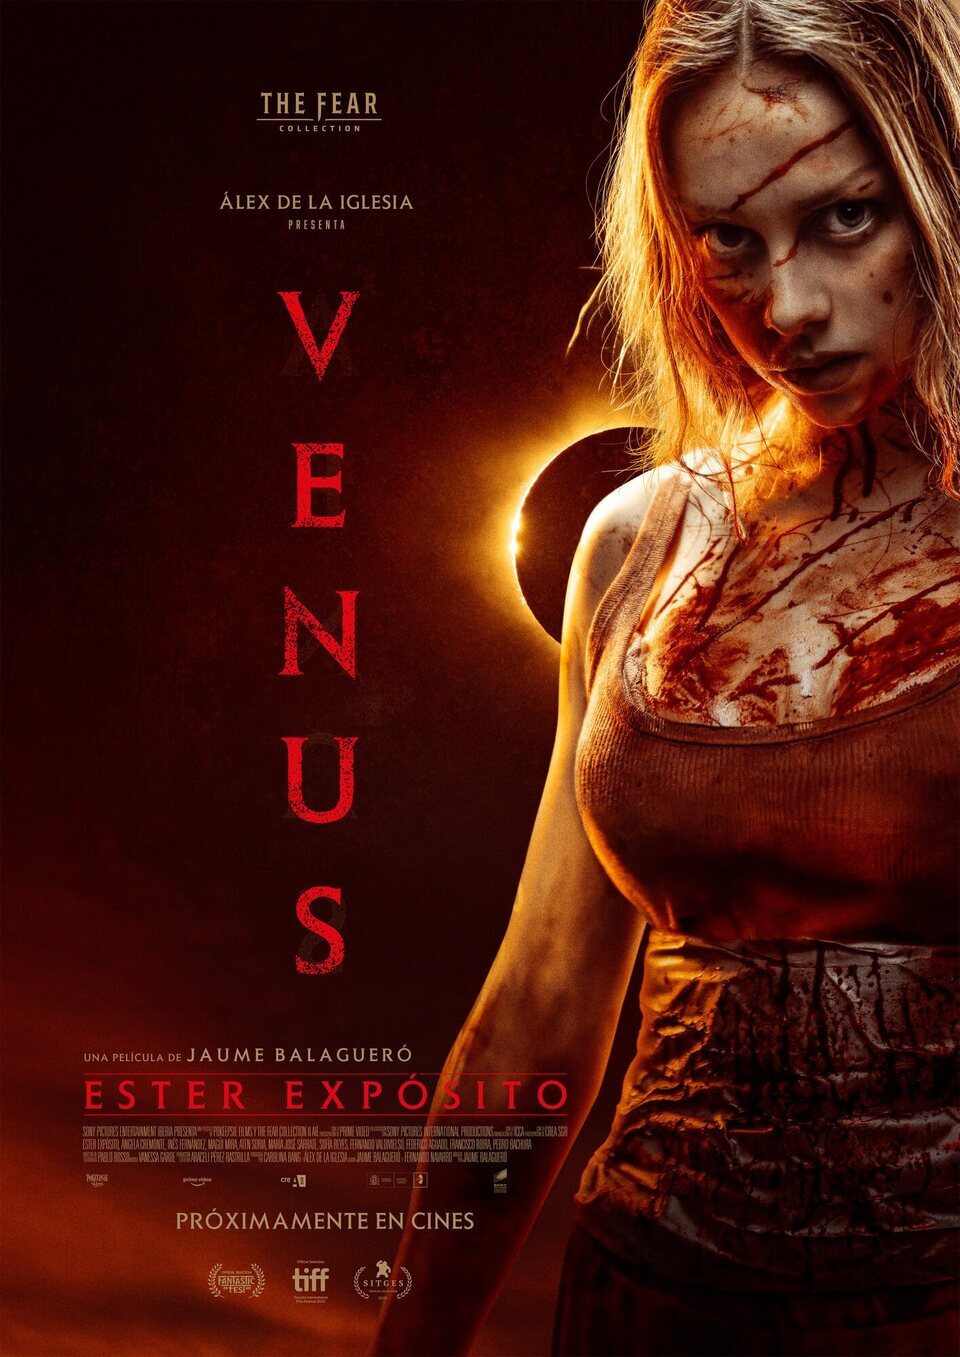 Poster of Venus - 'Venus'